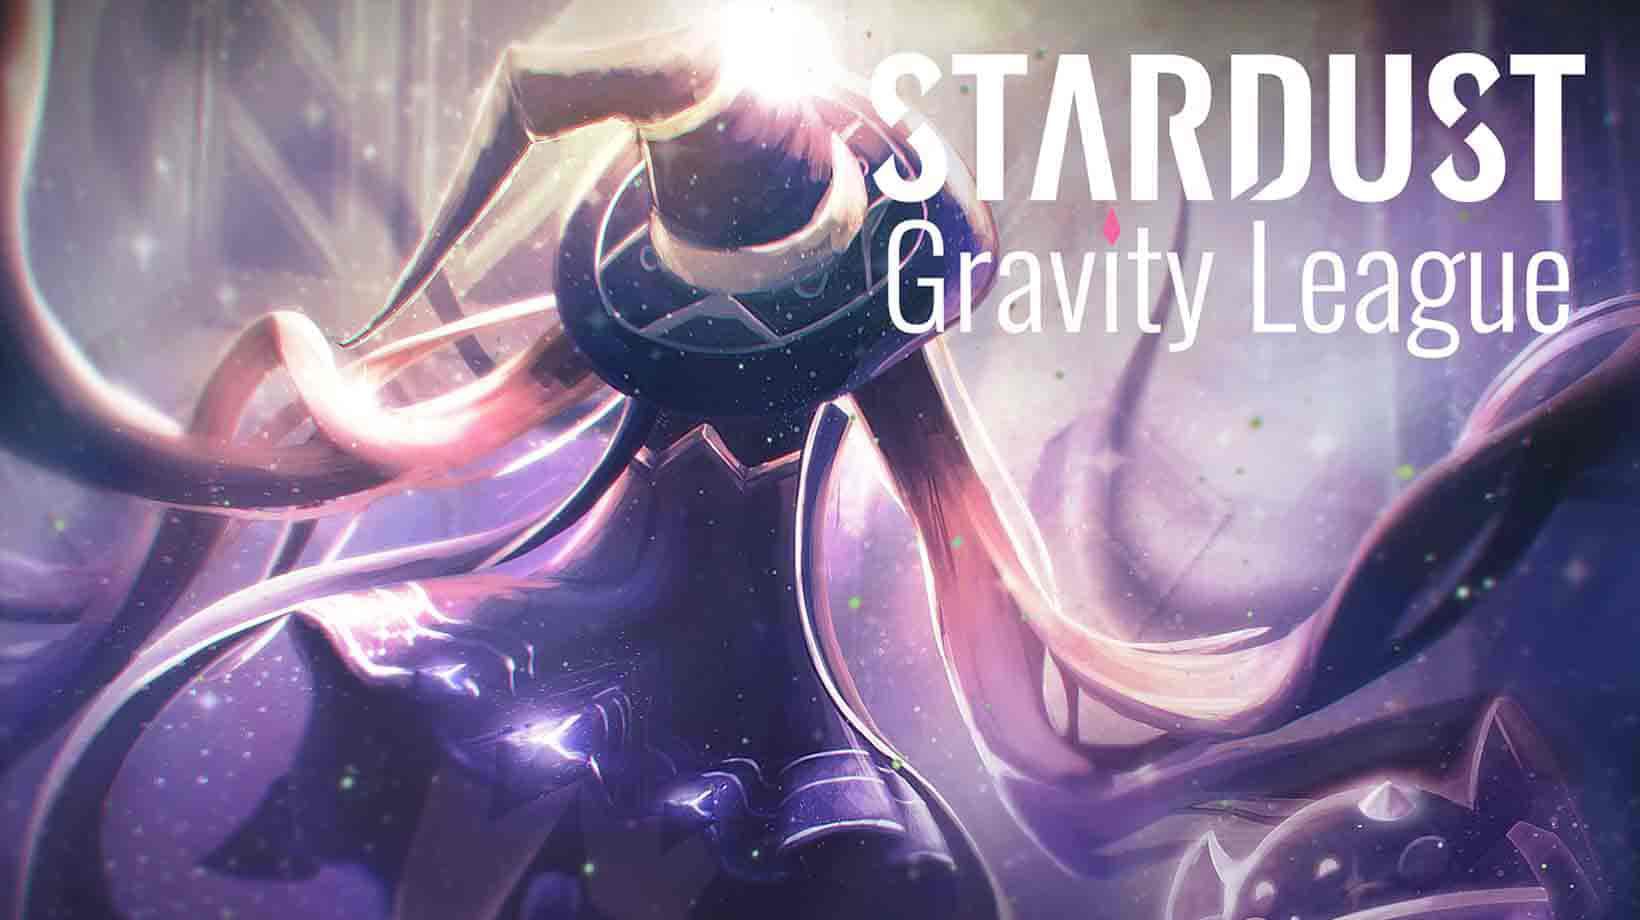 Stardust gravity league